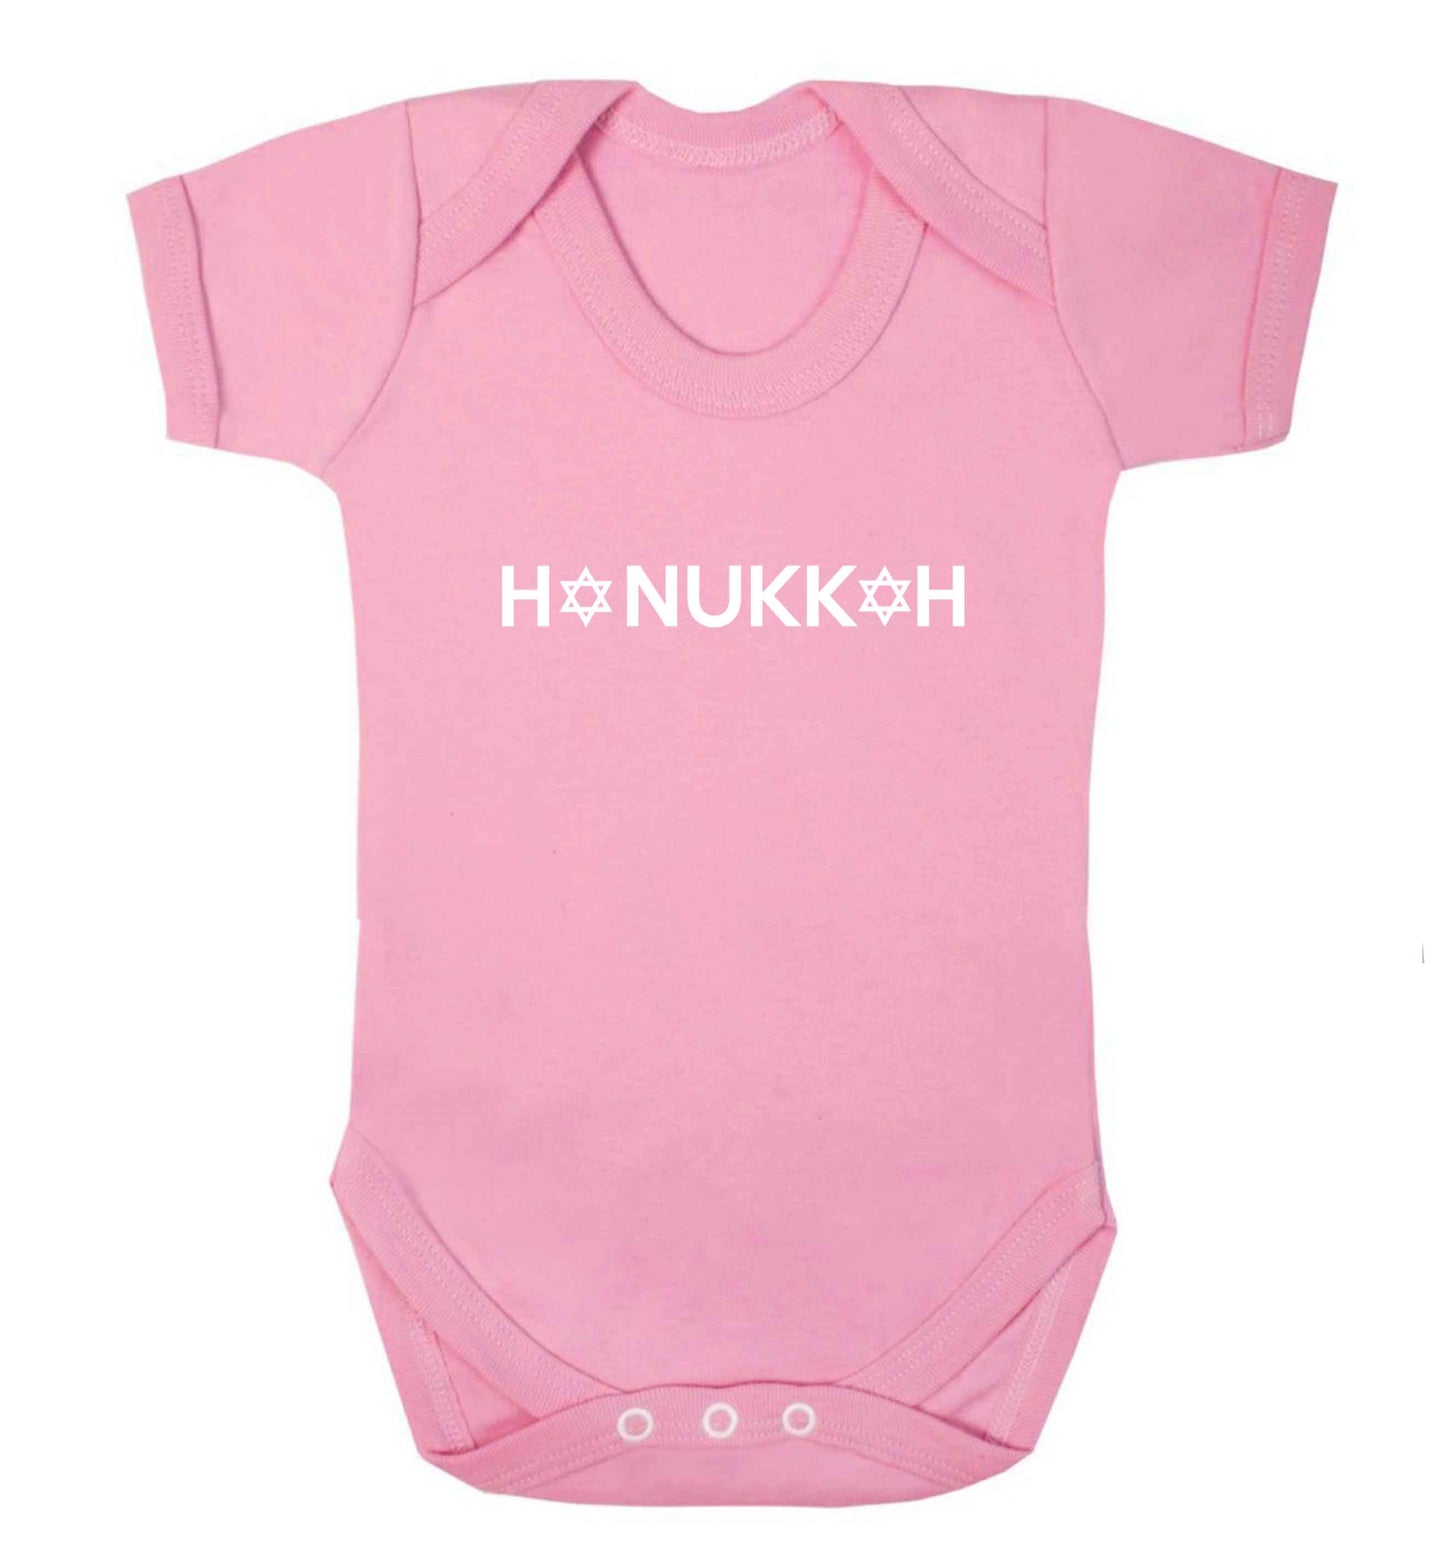 Hanukkah star of david baby vest pale pink 18-24 months